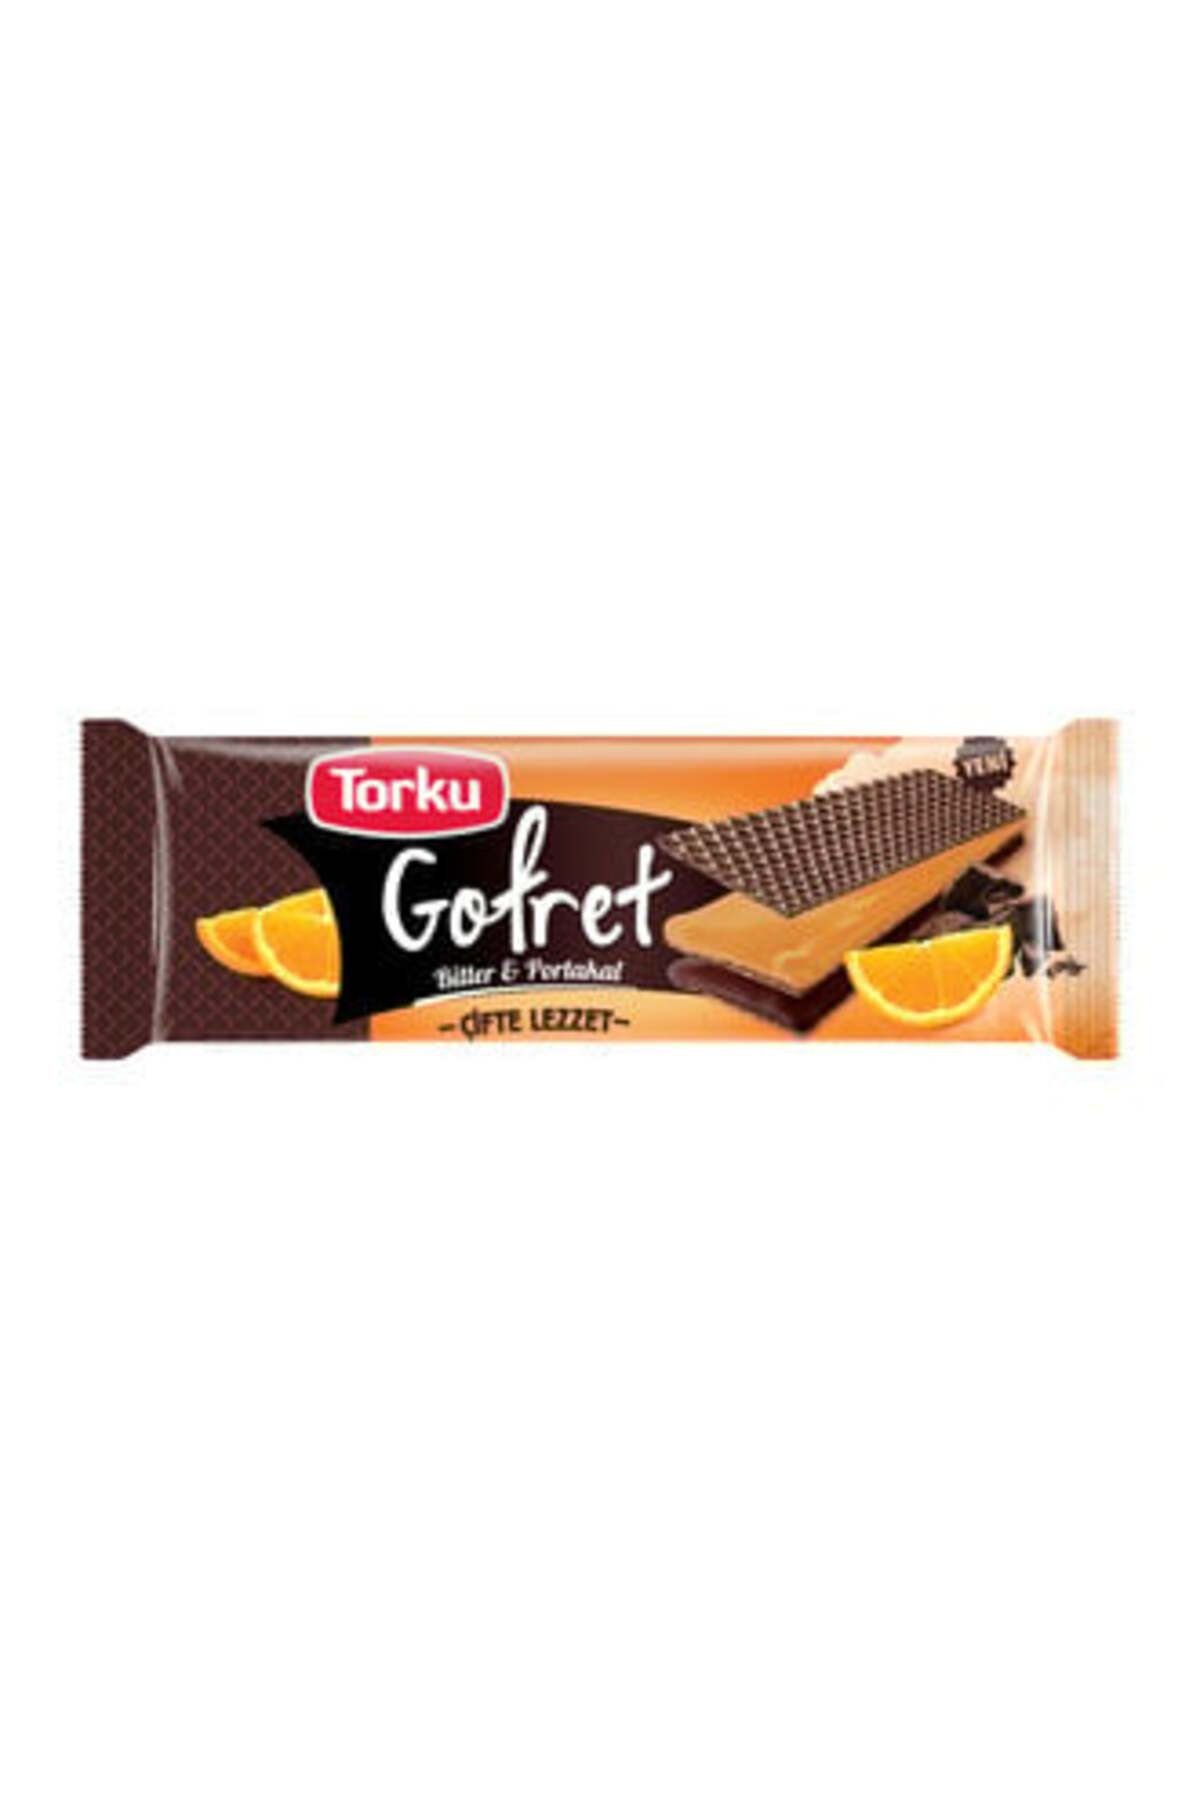 Torku Portakal&Çikolata Kremal Kakaolu Gofret 142 Gr ( 2 ADET )